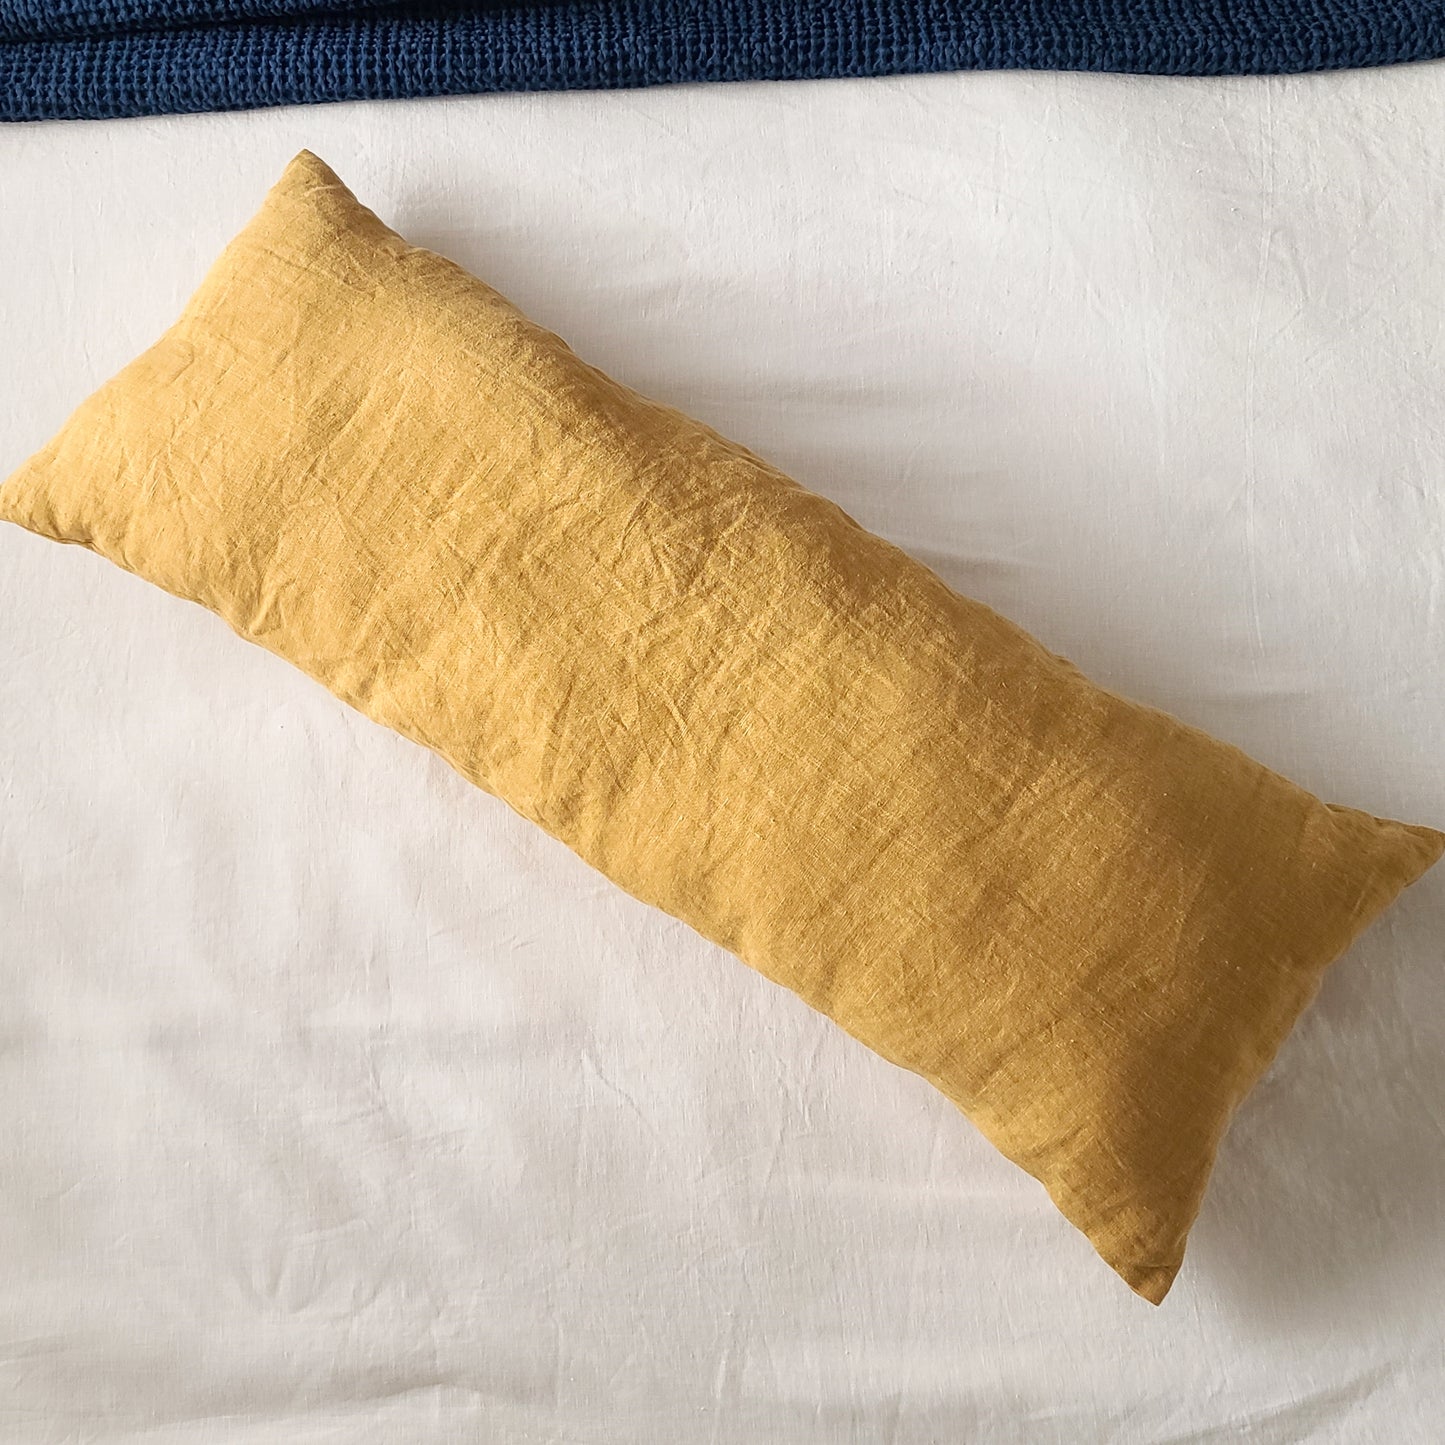 Linen Body pillow cover